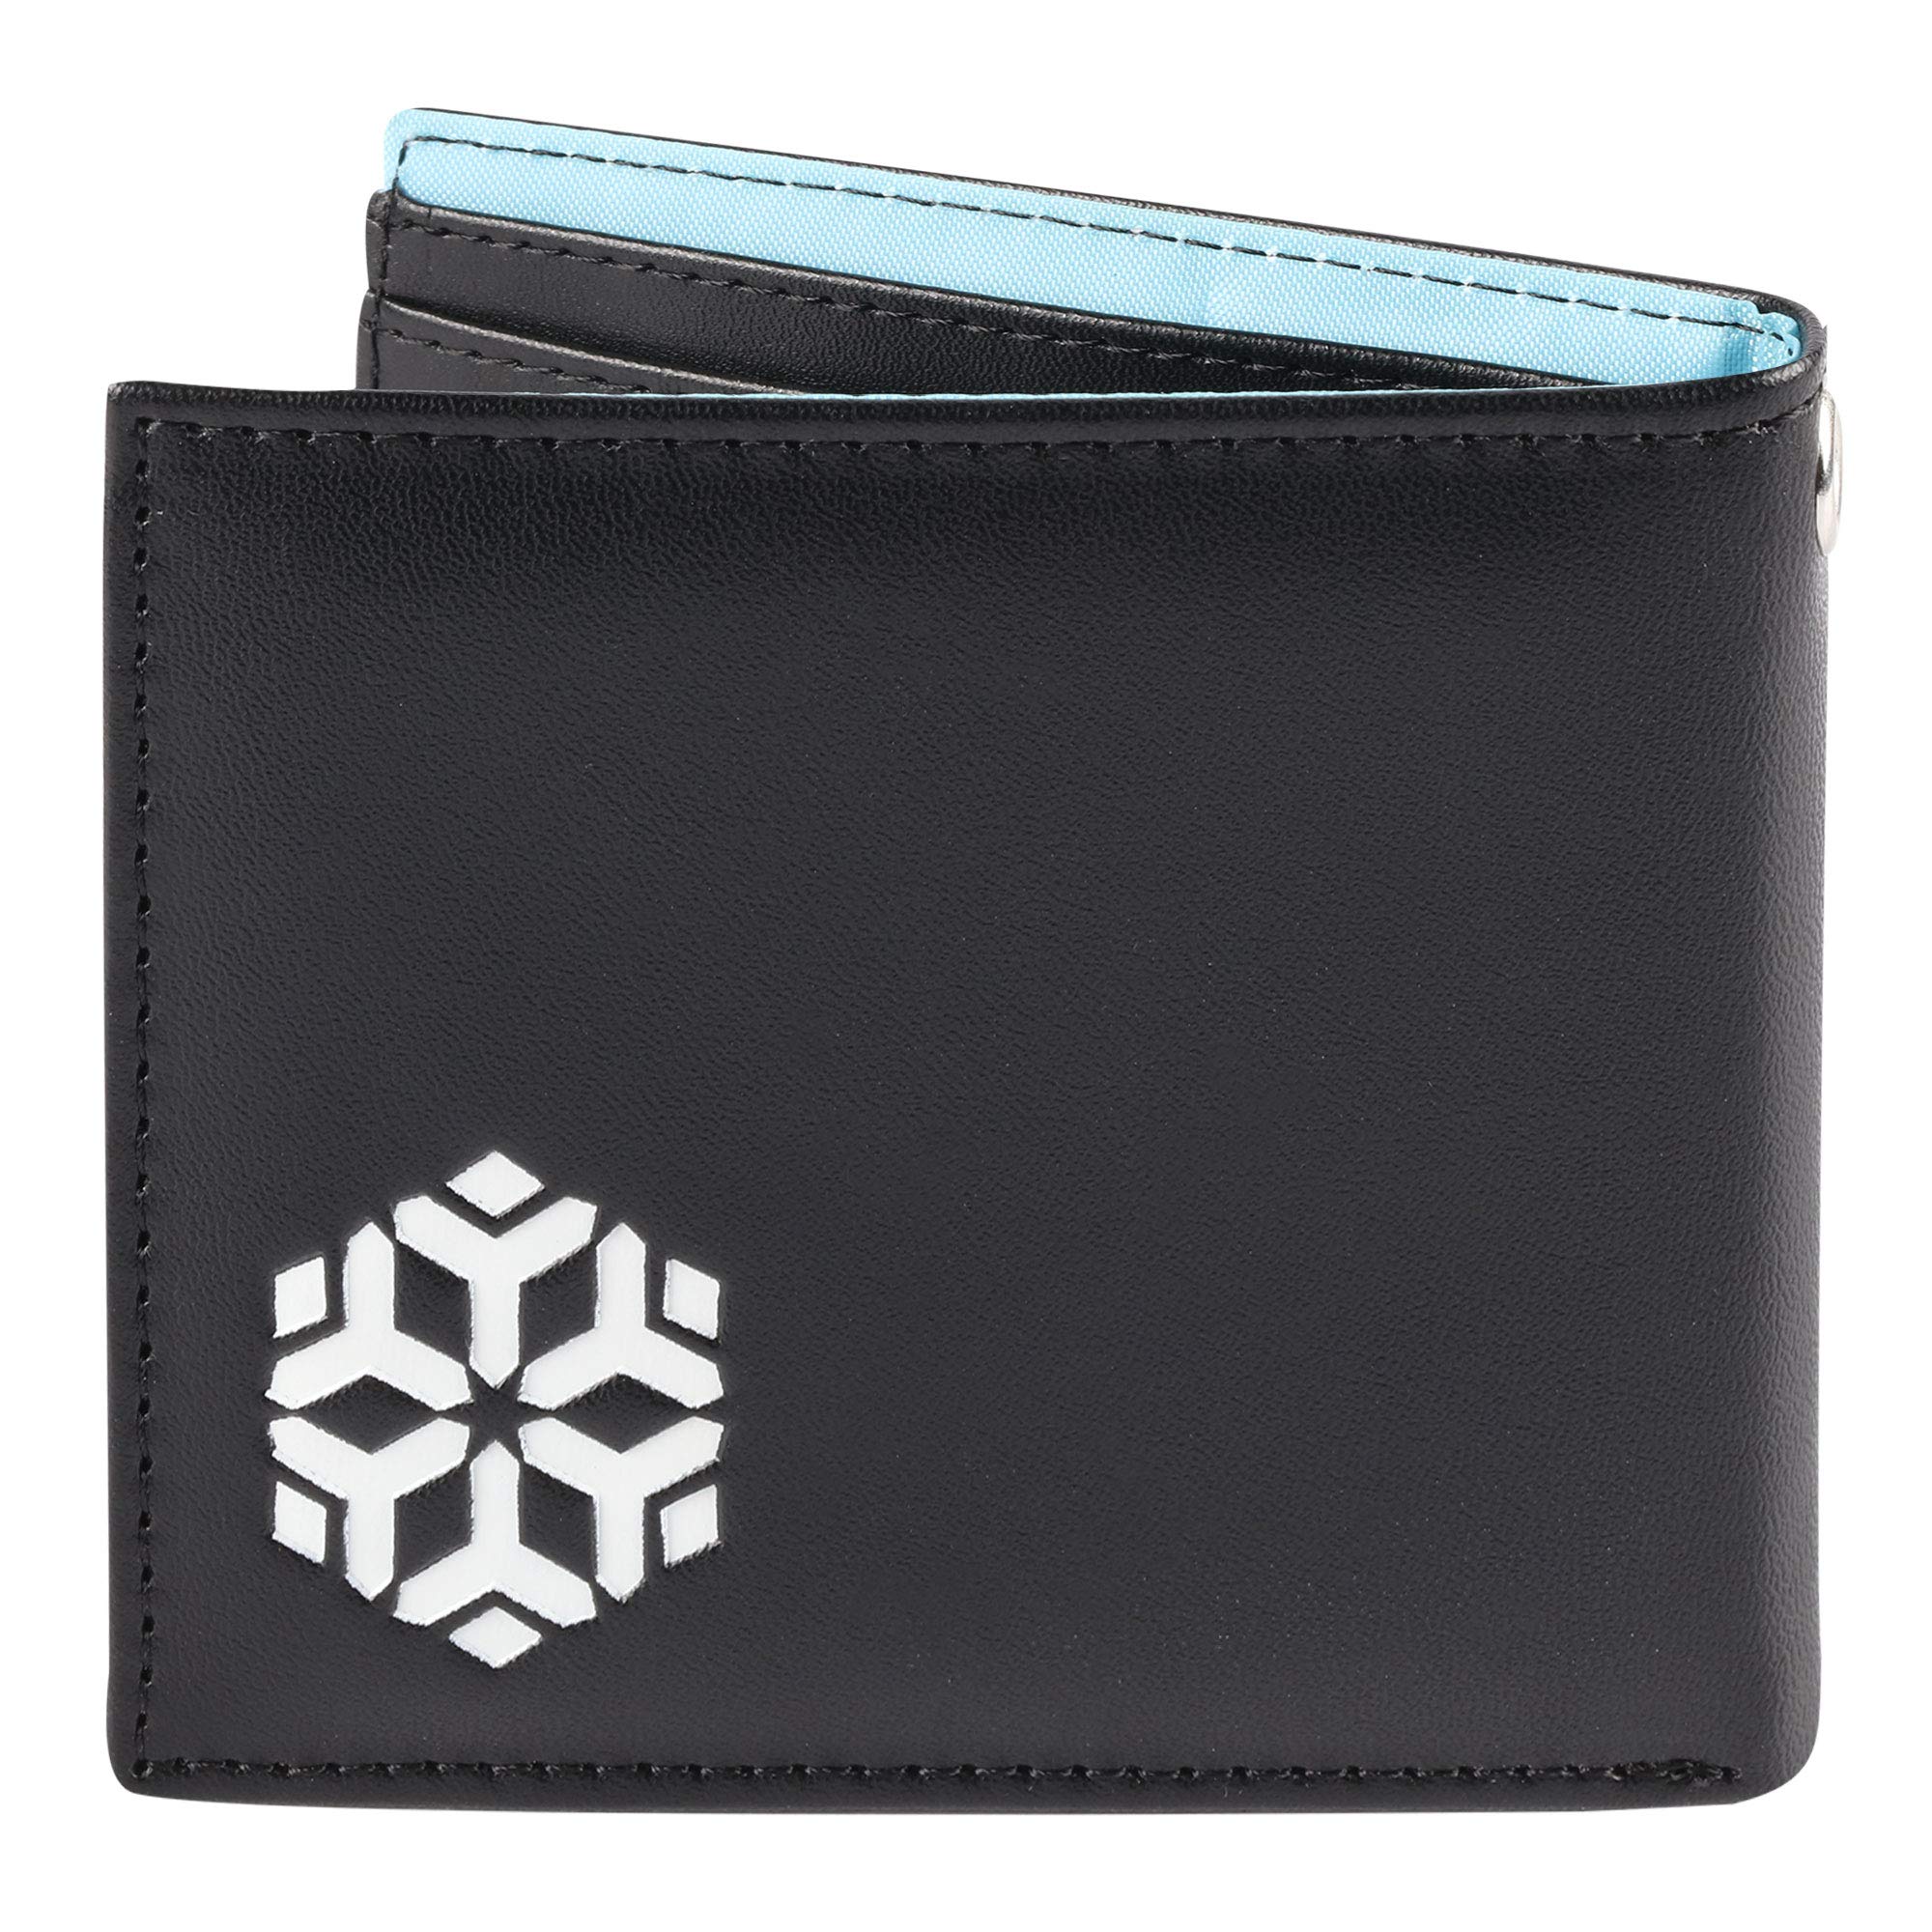 JINX Overwatch 'Snowball' Graphic Bi-Fold Wallet Black